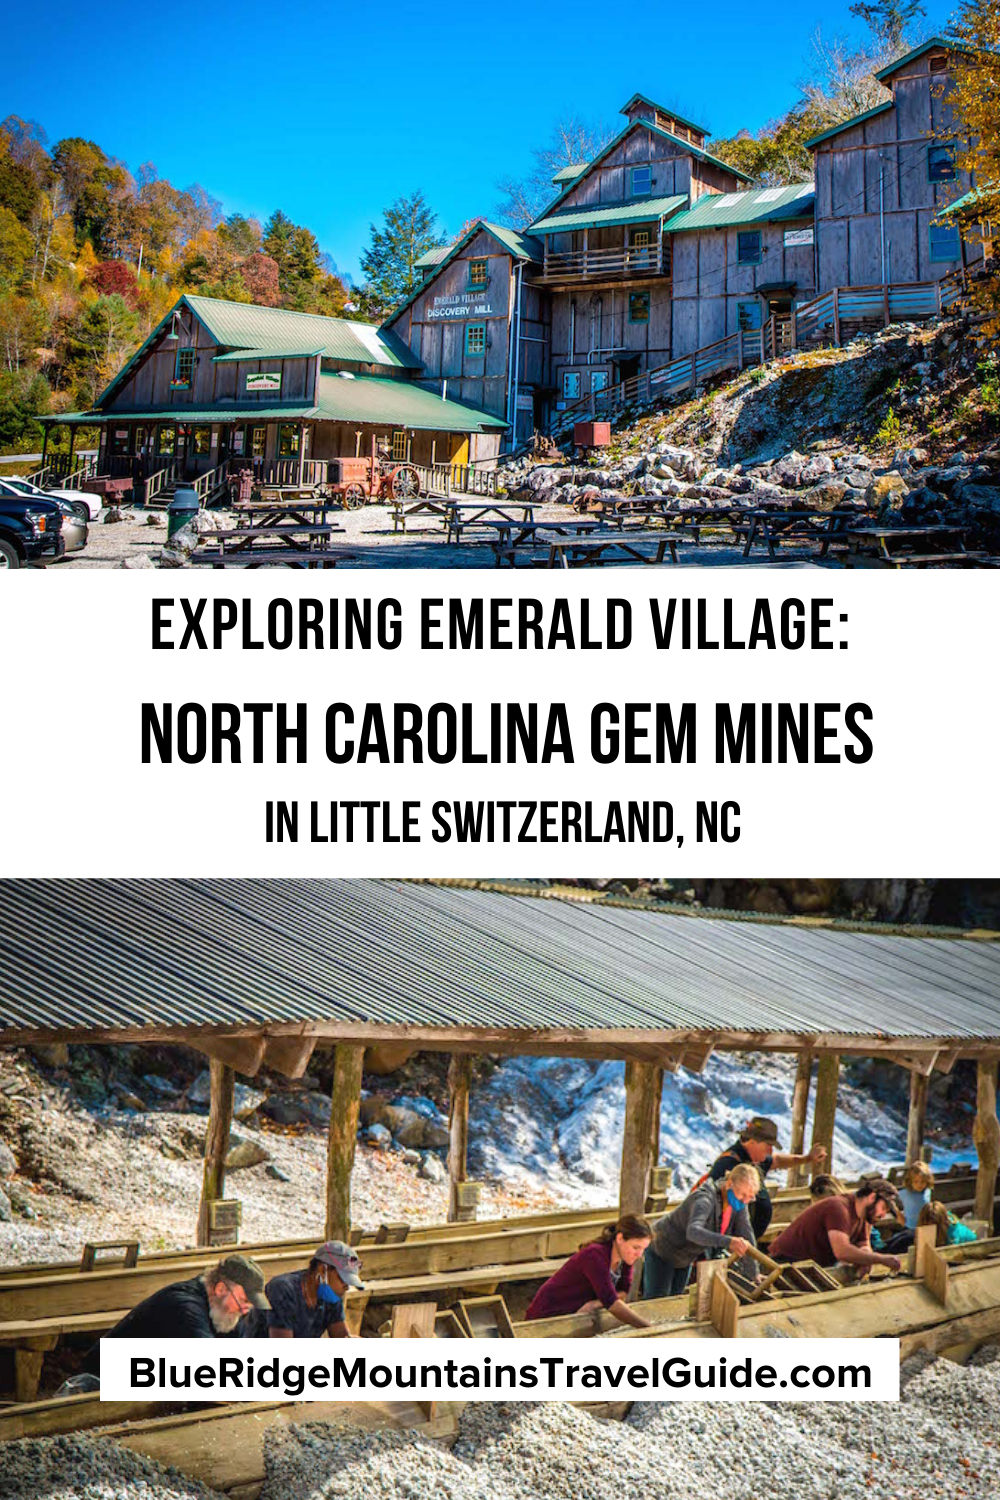 Gold Panning Kit – Asheville Gem Mine